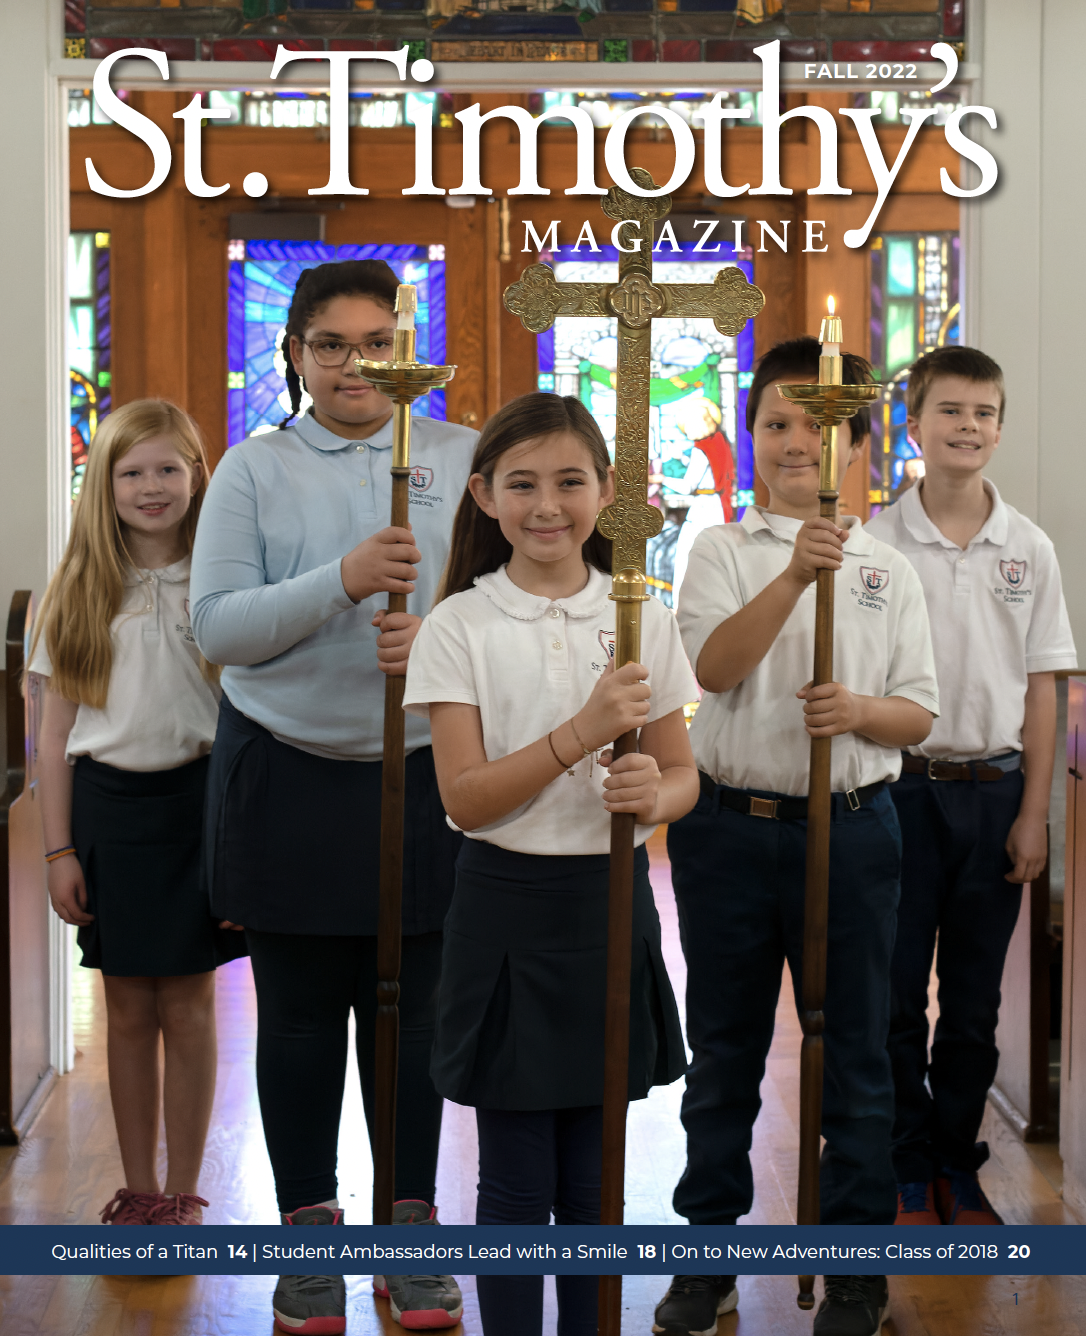 St. Timothy's School Magazine Cover photo